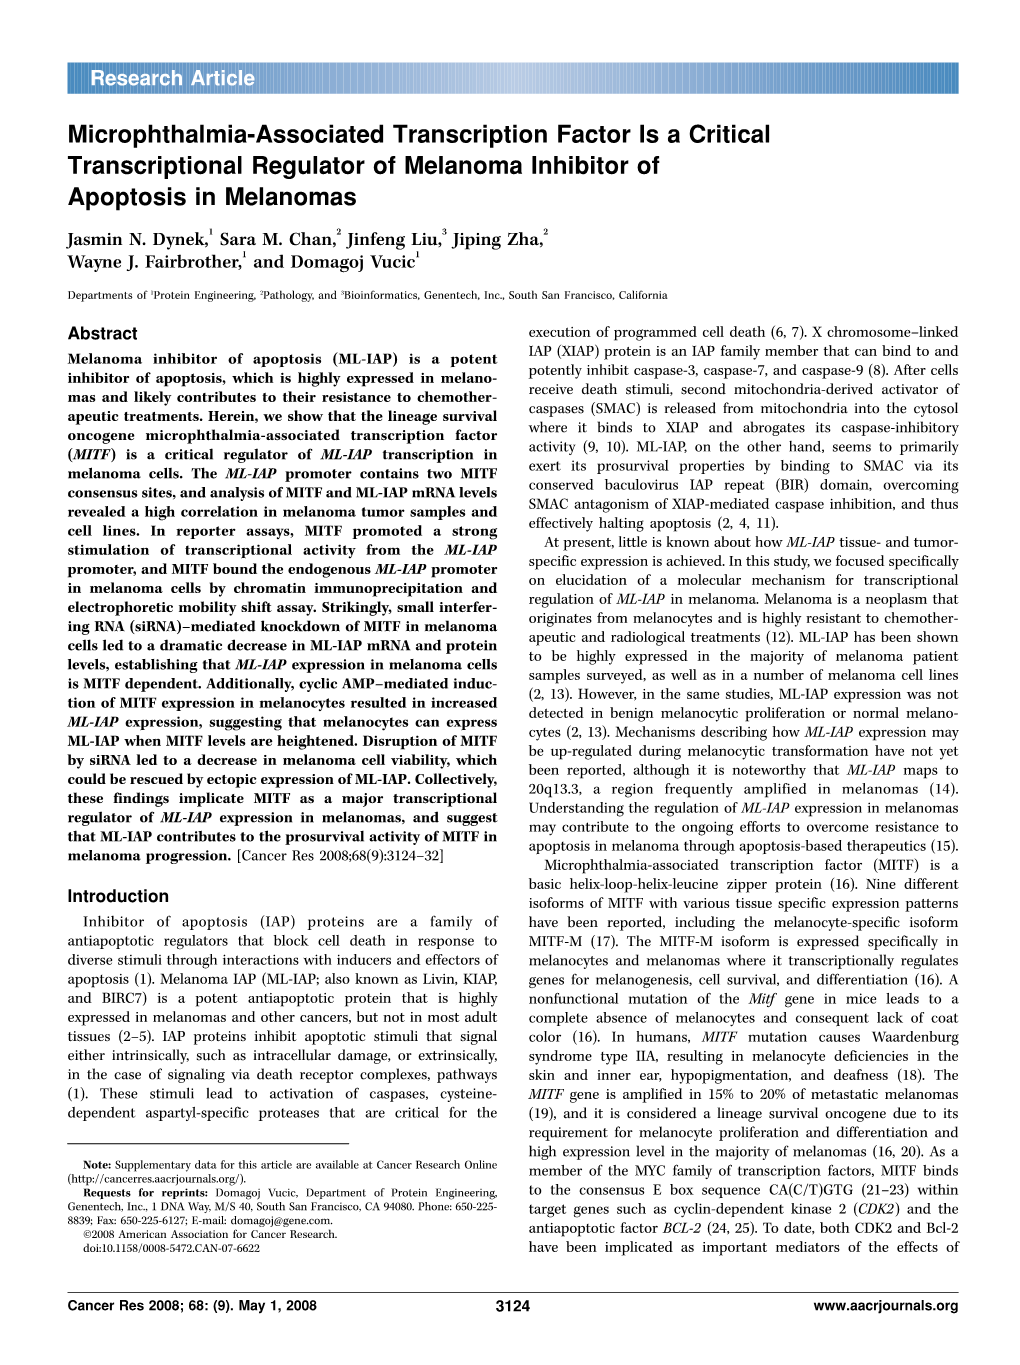 Microphthalmia-Associated Transcription Factor Is a Critical Transcriptional Regulator of Melanoma Inhibitor of Apoptosis in Melanomas